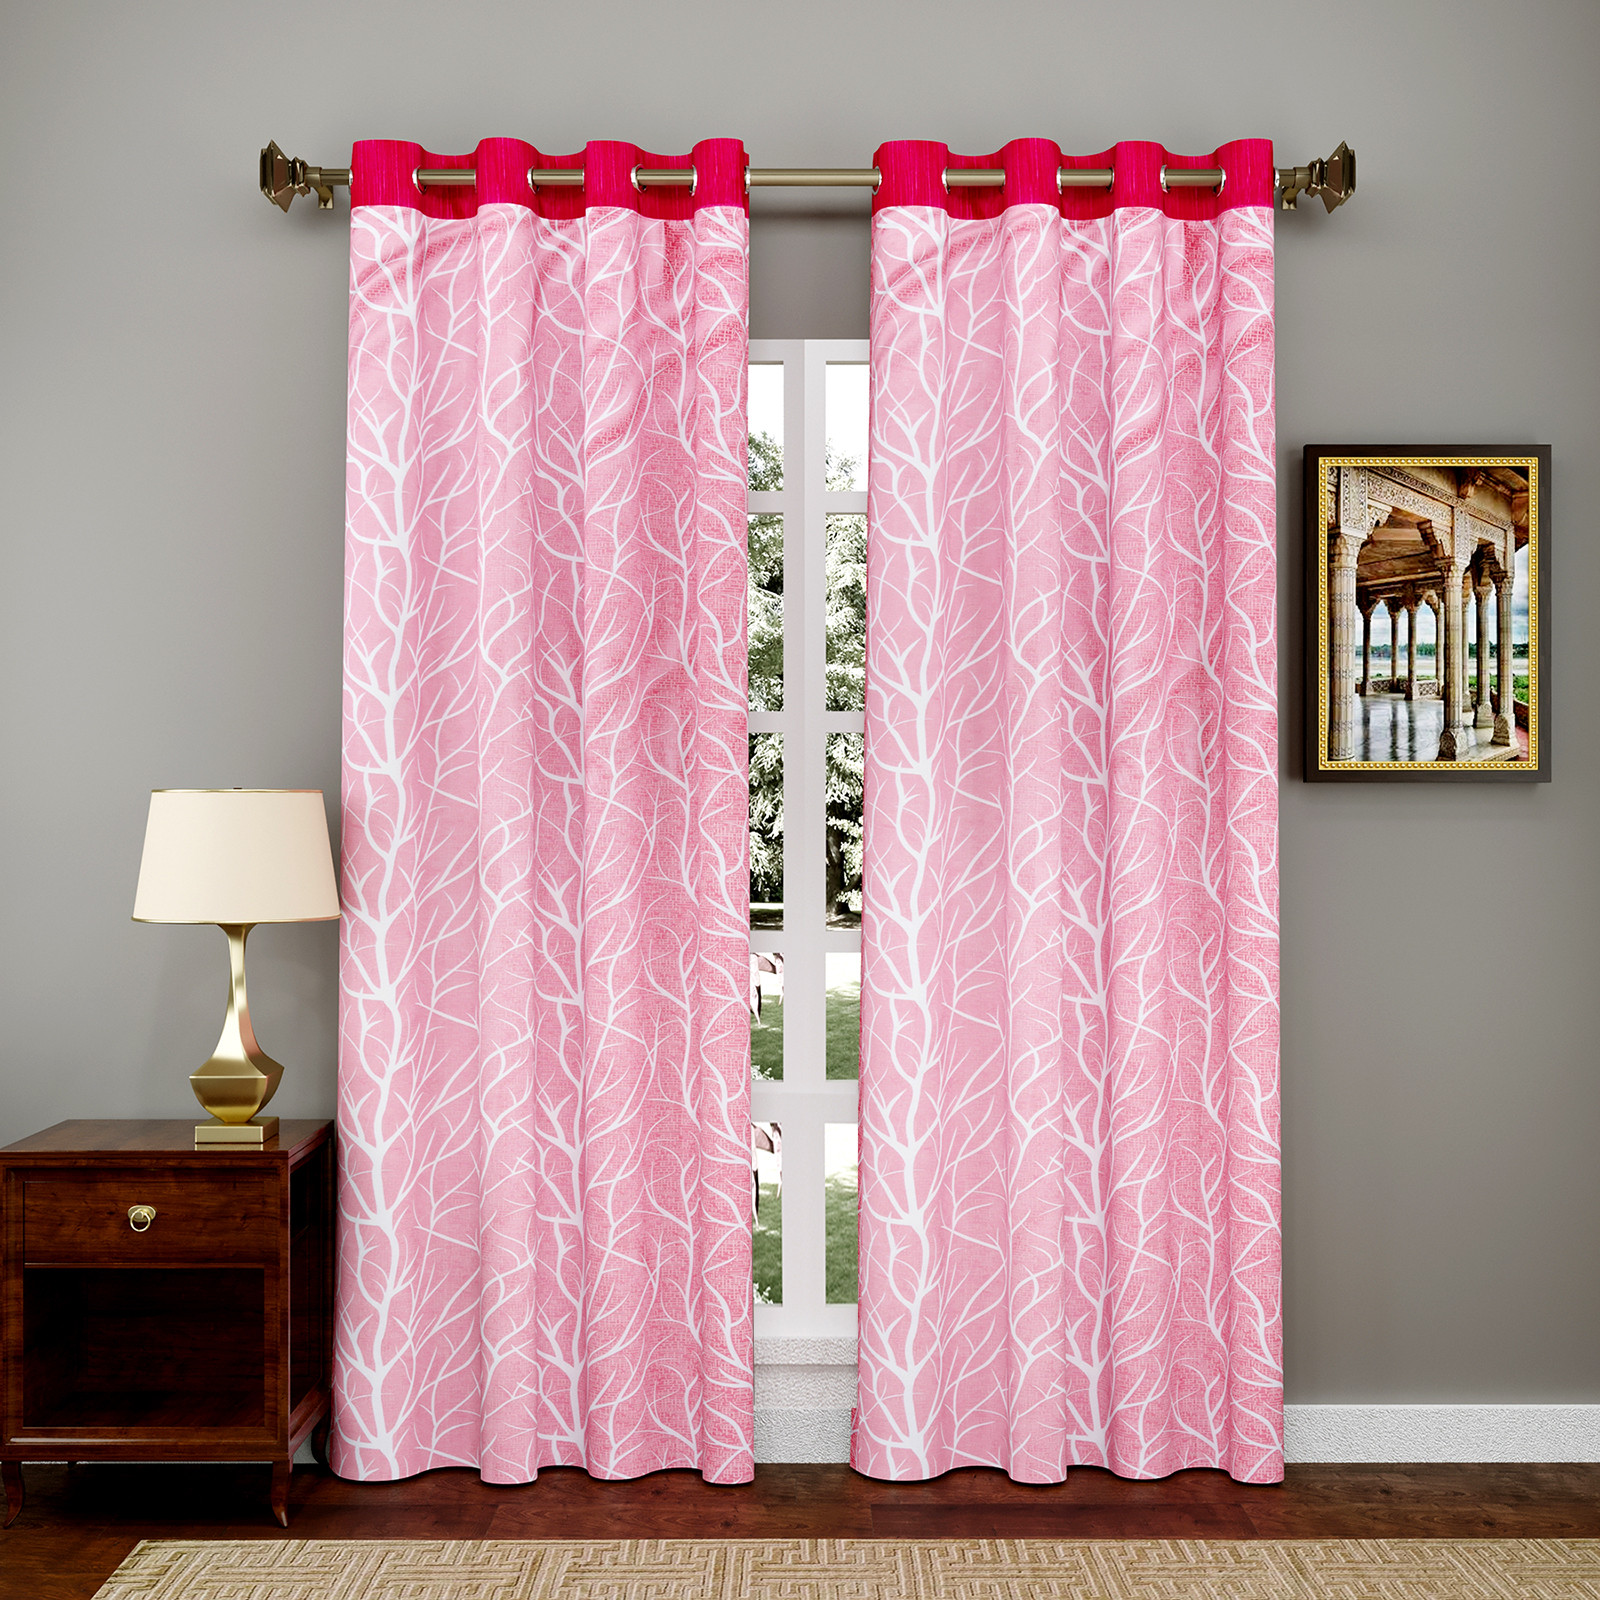 Kuber Industries Tree Printed 7 Feet Door Curtain For Living Room, Bed Room, Kids Room With 8 Eyelet (Pink)-HS43KUBMART25581